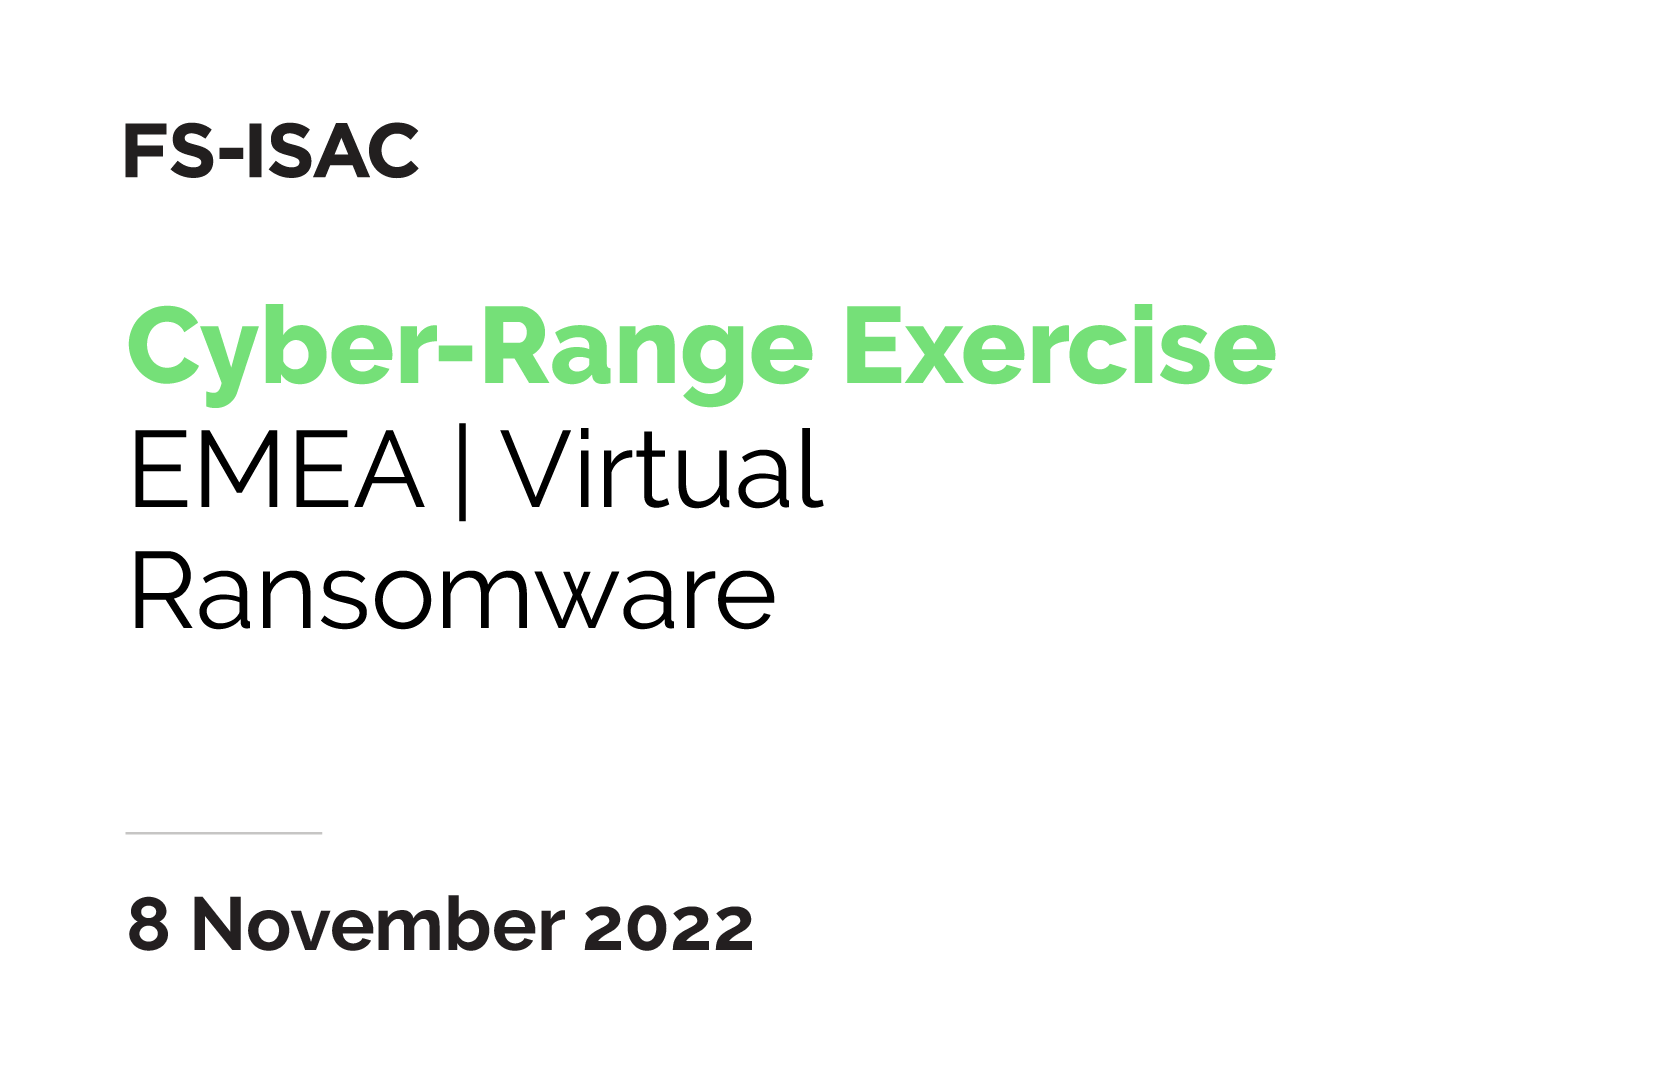 FS-ISAC Cyber Range Exercise | Ransomware EMEA | November 2022